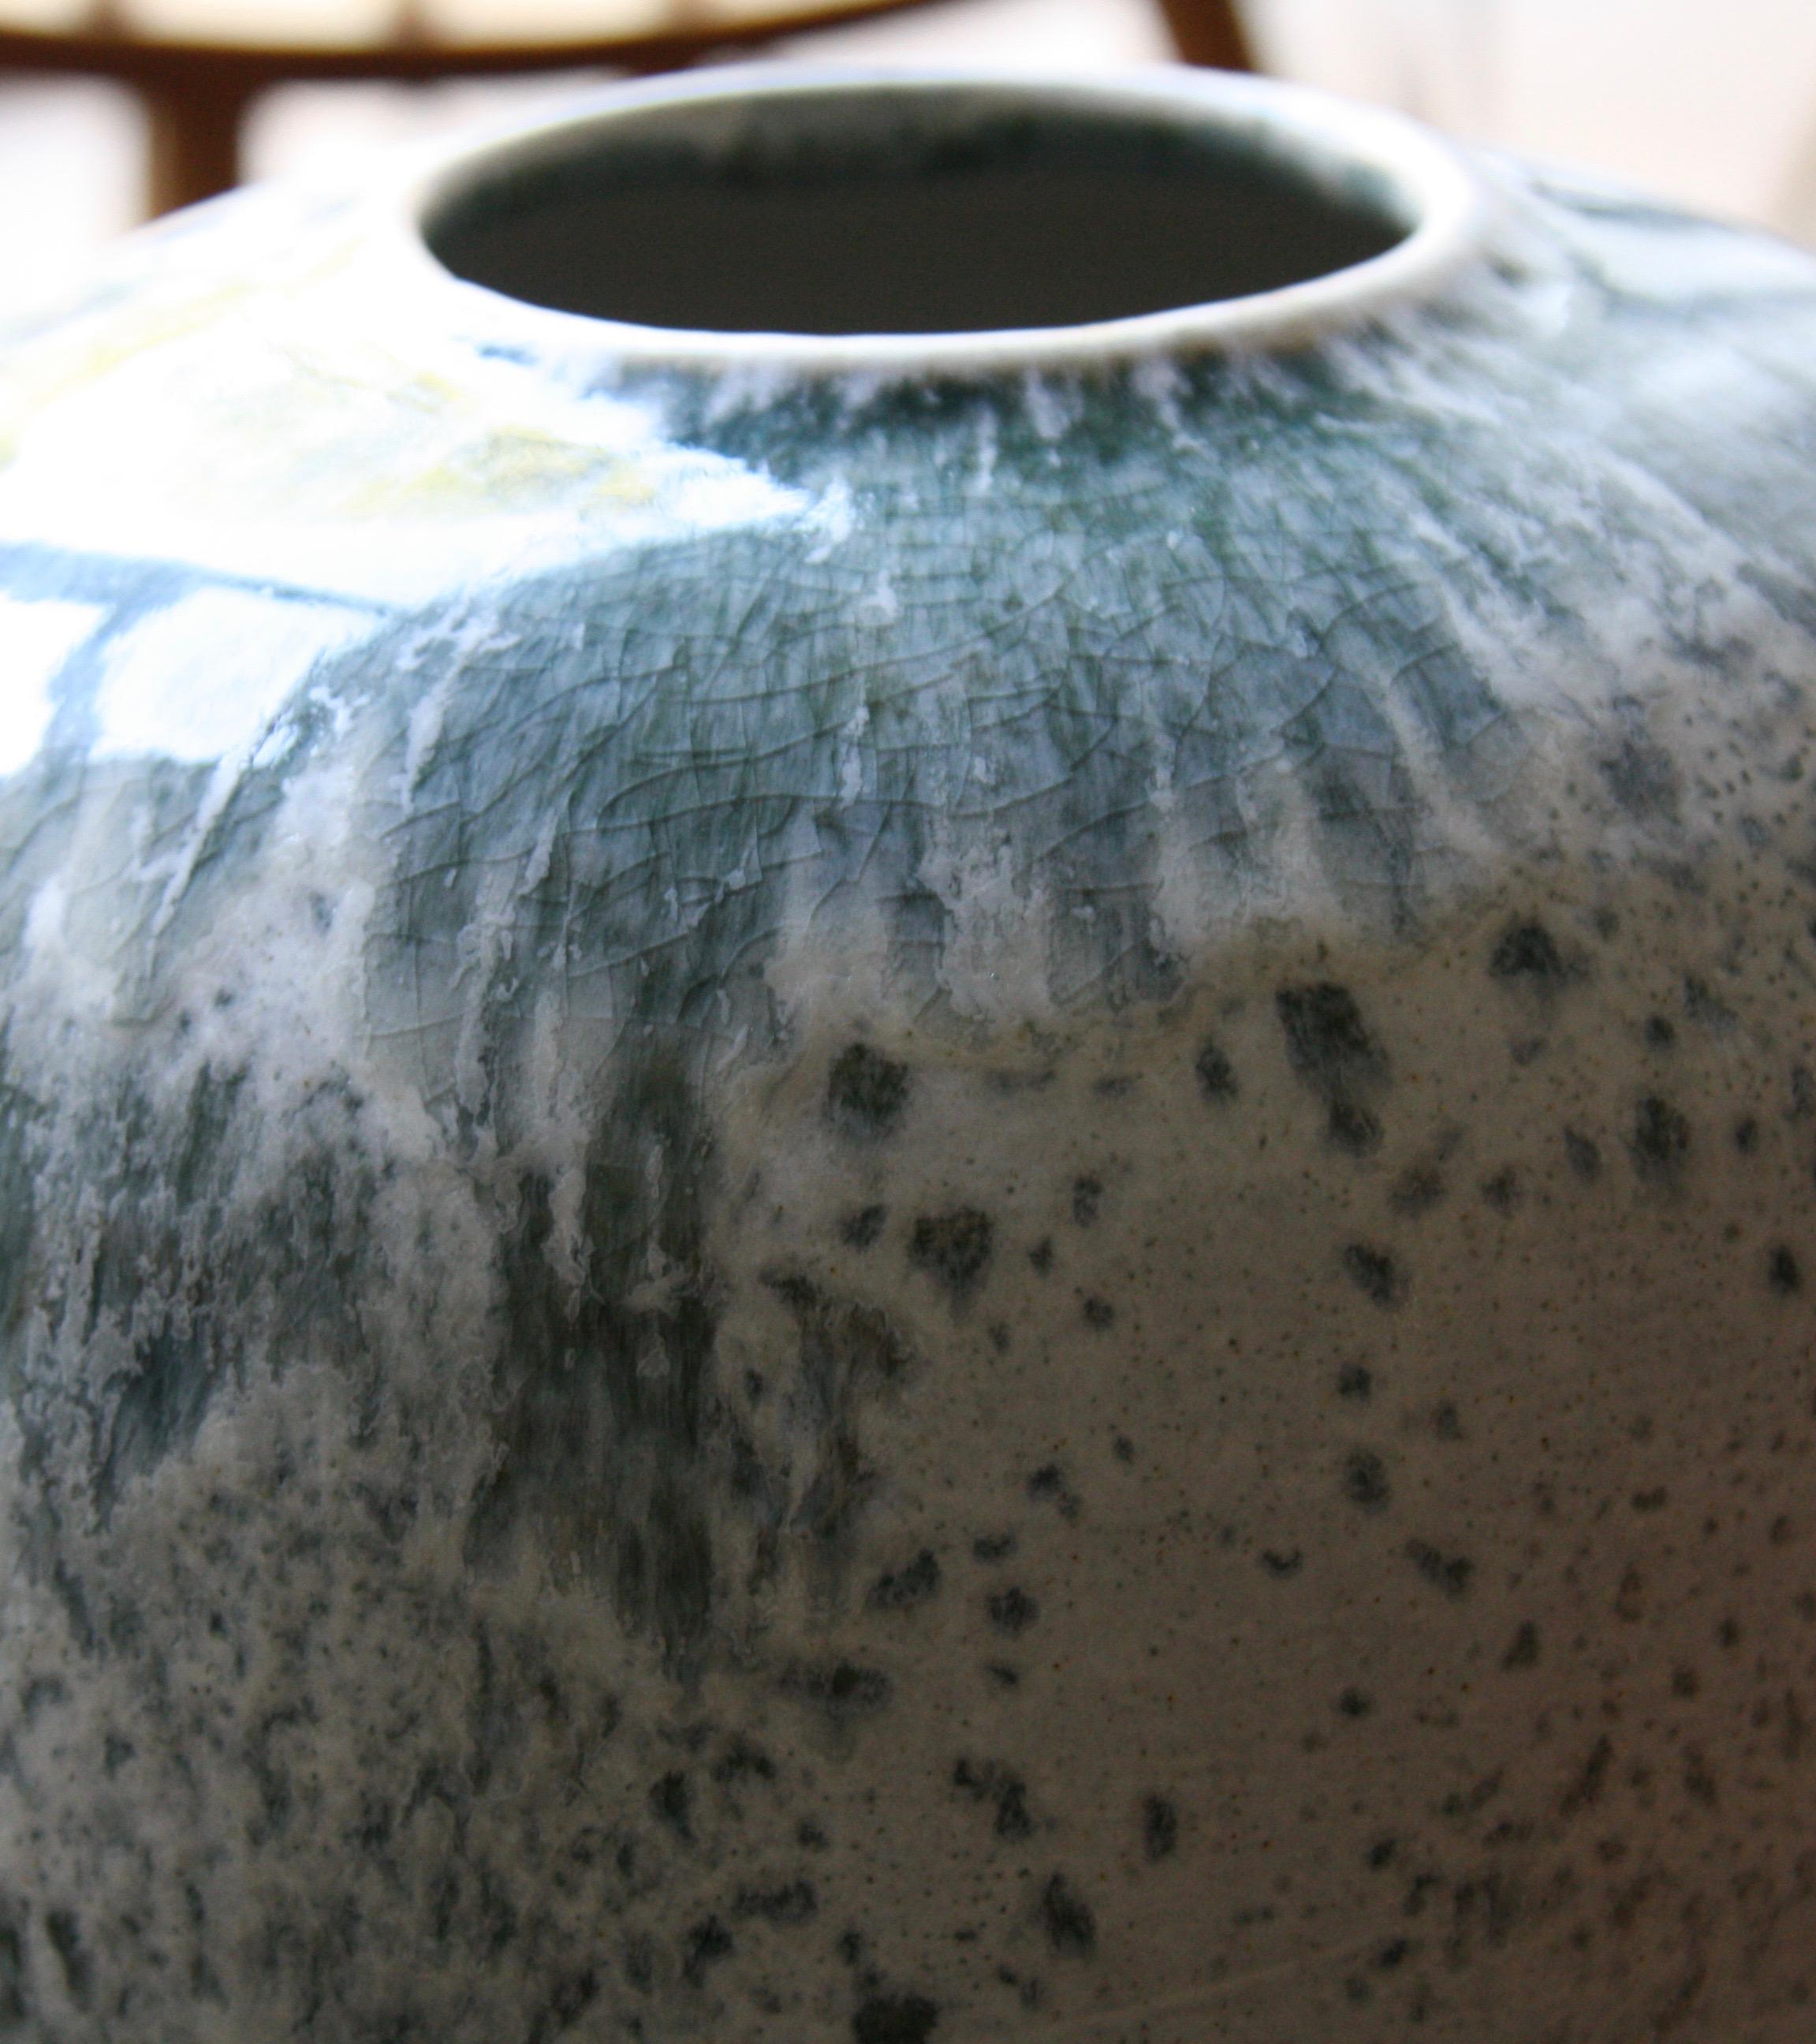 Kasper Würtz One Off Stoneware 'Rising Balloon' Vase #1 Blue and White Glaze 1